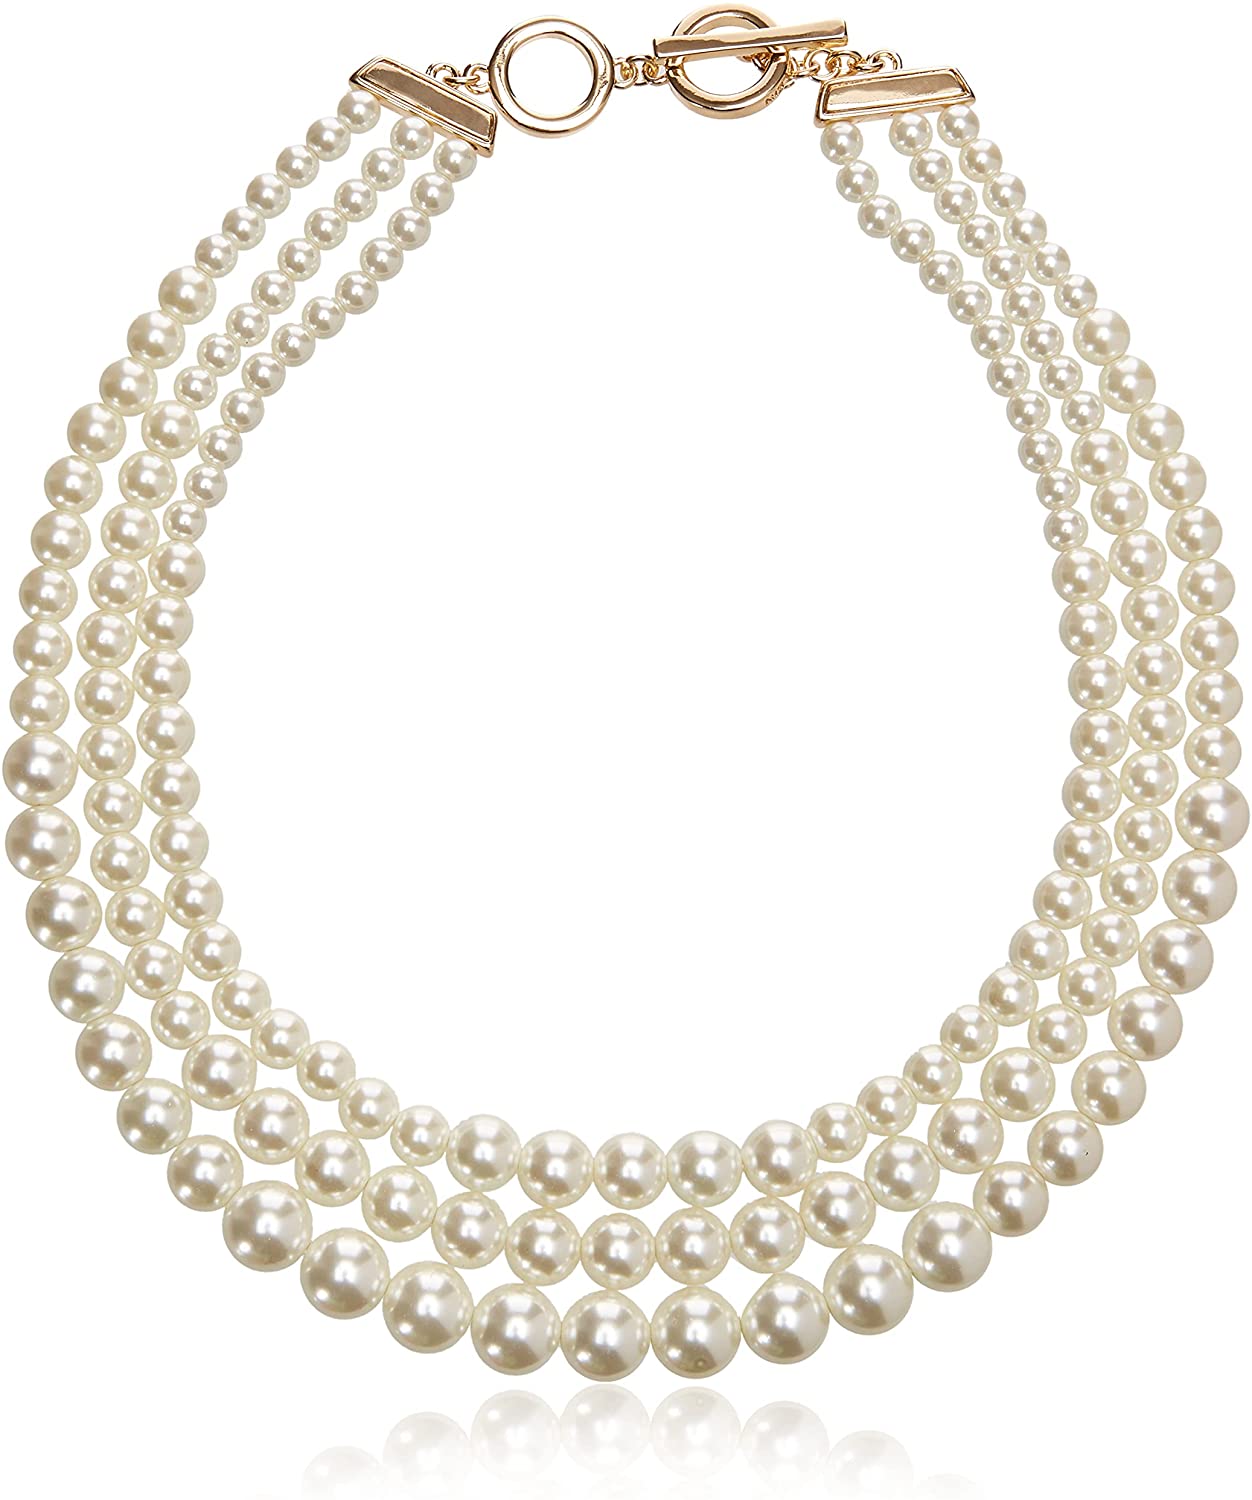 Anne Klein Women's Gold-Tone Blanc Pearl Collar Necklace